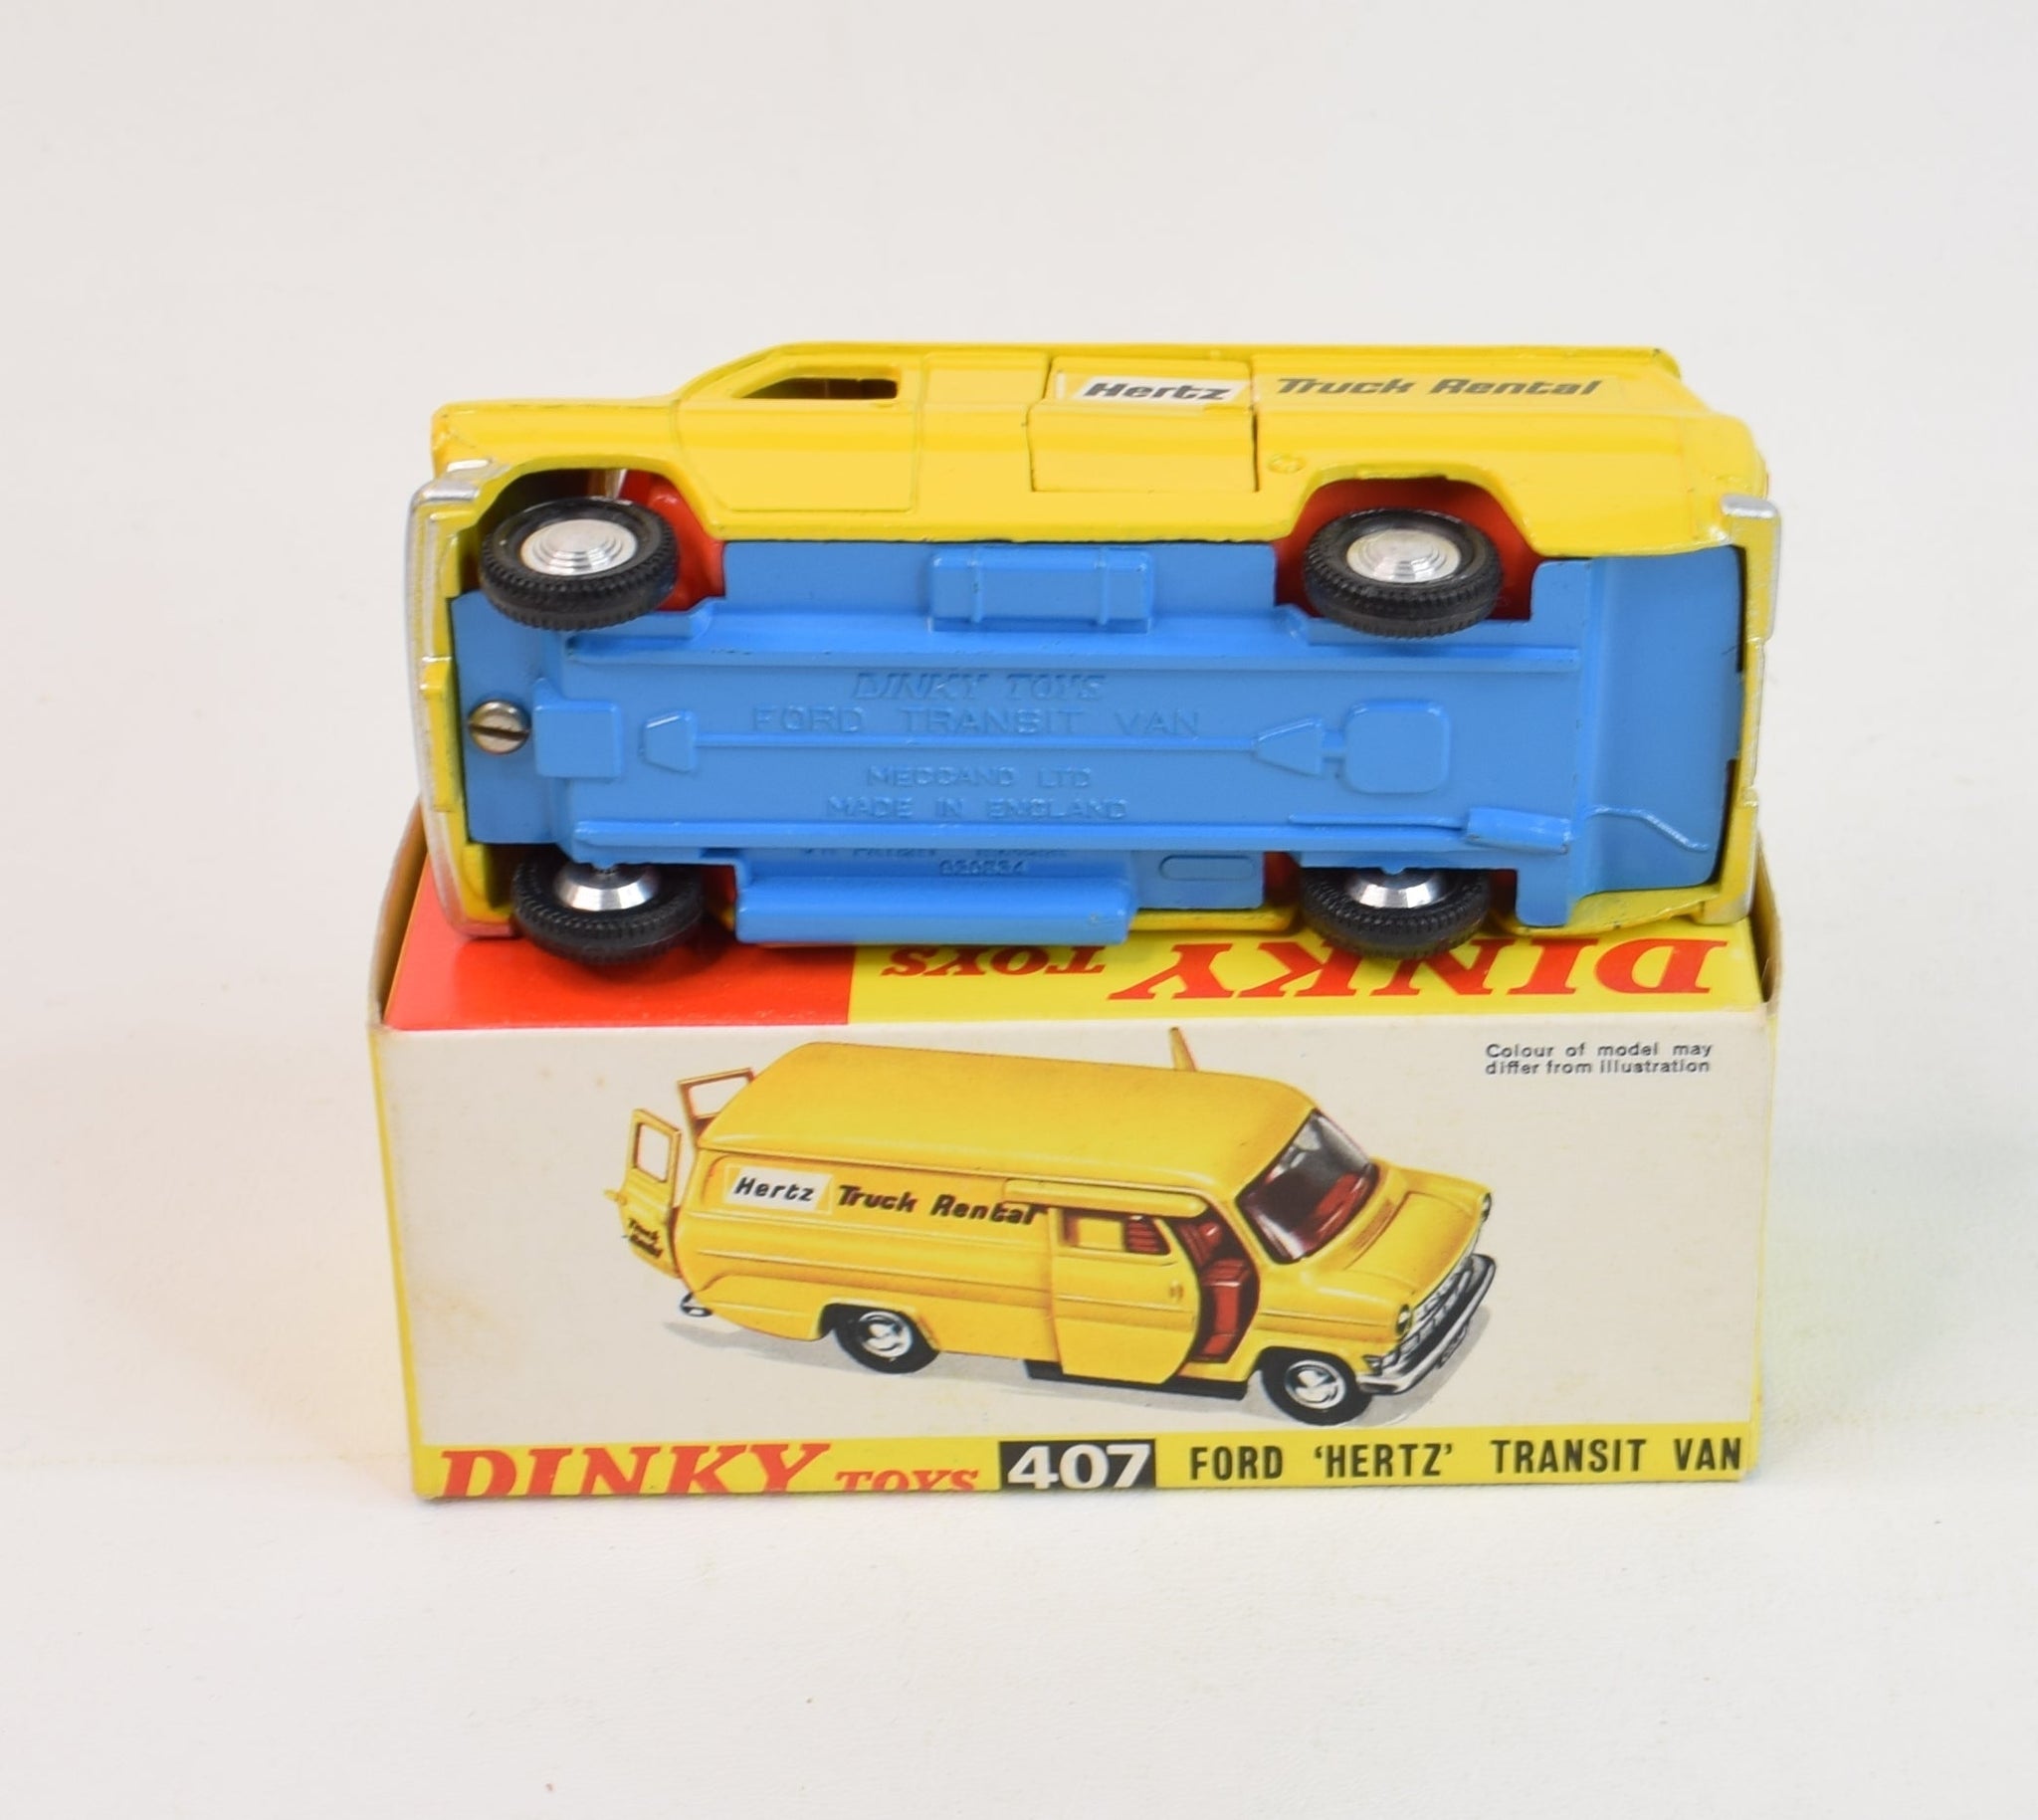 Dinky toy 407 'Hertz' Ford Transit Virtually Mint/Nice box (Blue 